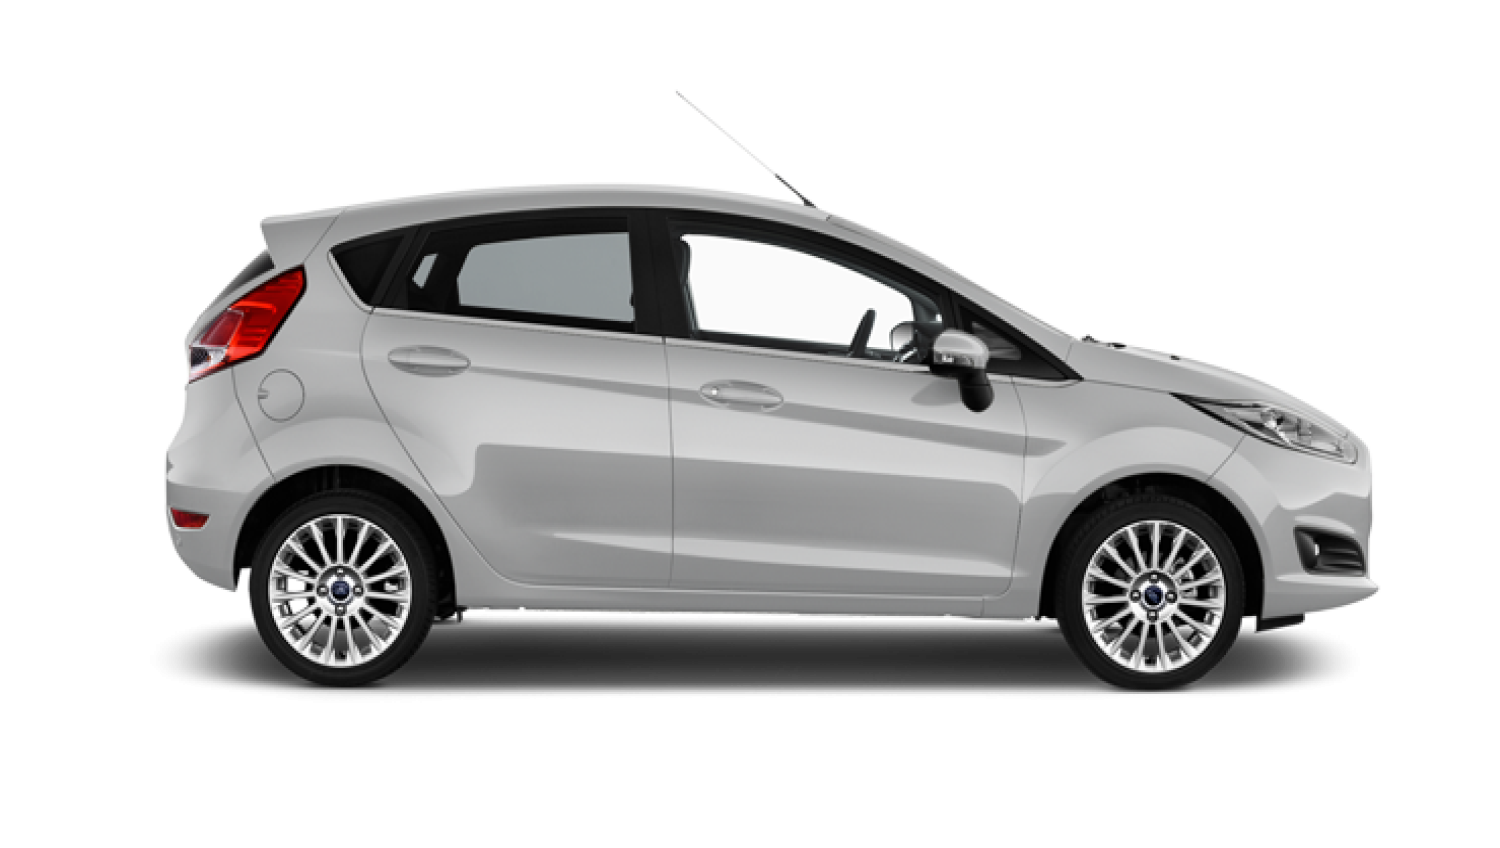 Ford Fiesta / Hyundai i20 Fleet Beepit Rental Cars